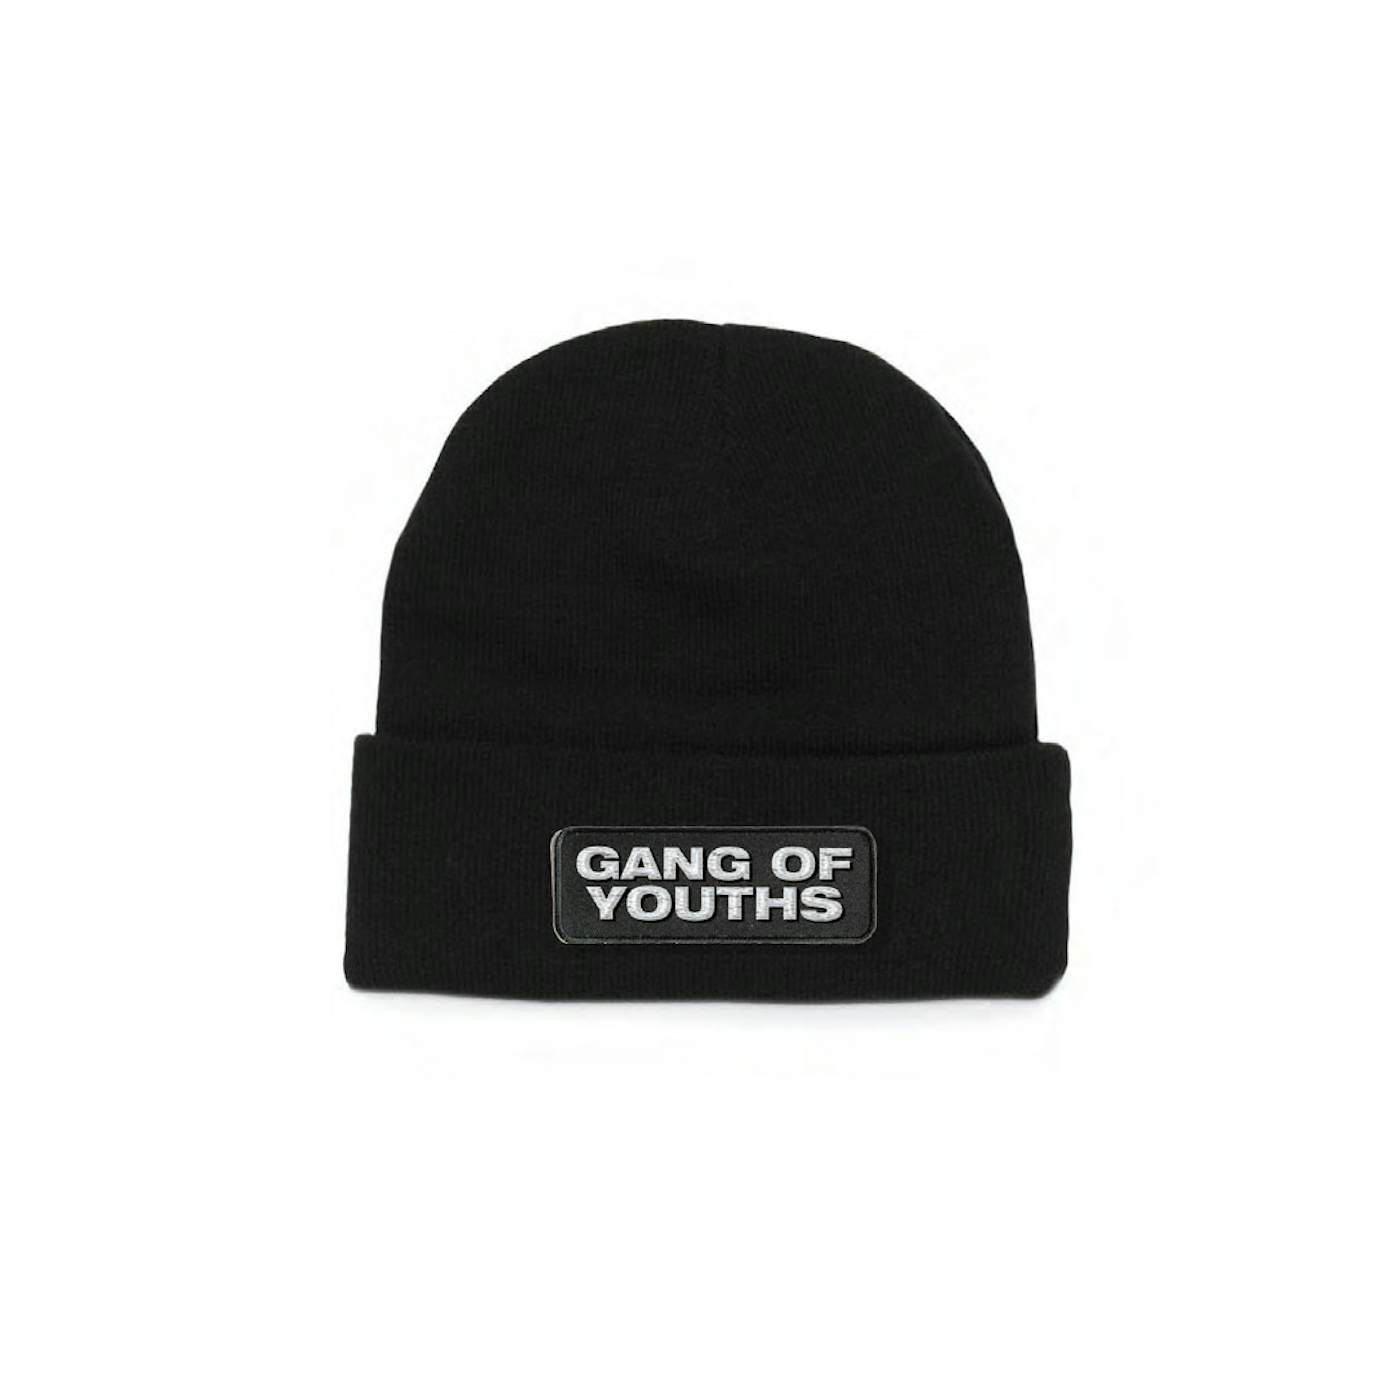 Gang of Youths - Black Logo Beanie